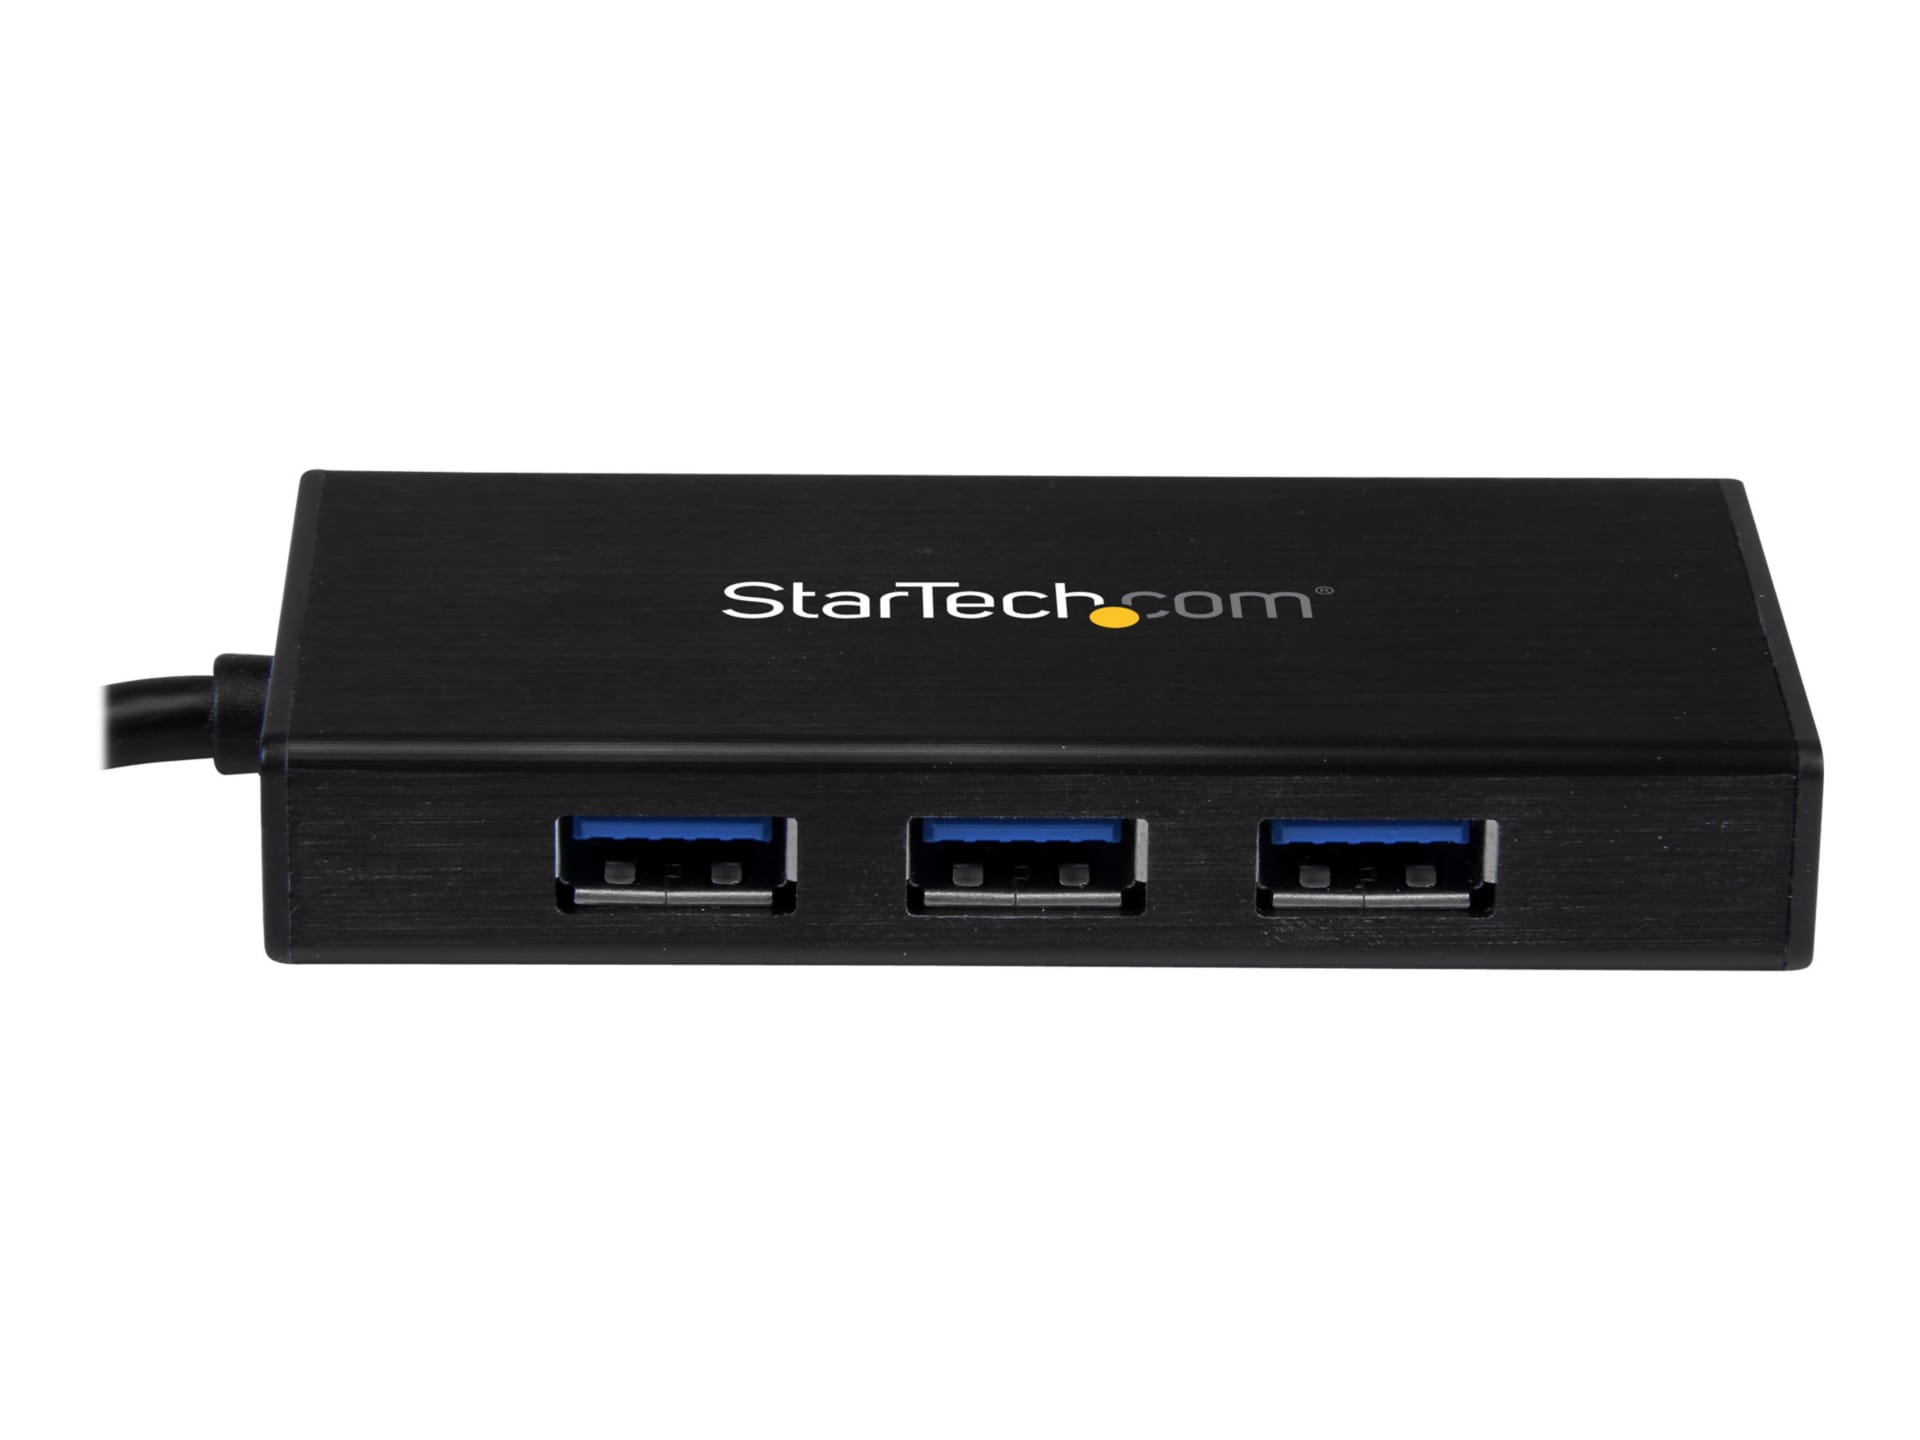 StarTech.com 3 Port USB 3.0 Hub with Gigabit Ethernet Adapter NIC, Portable  - ST3300GU3B - USB Hubs 